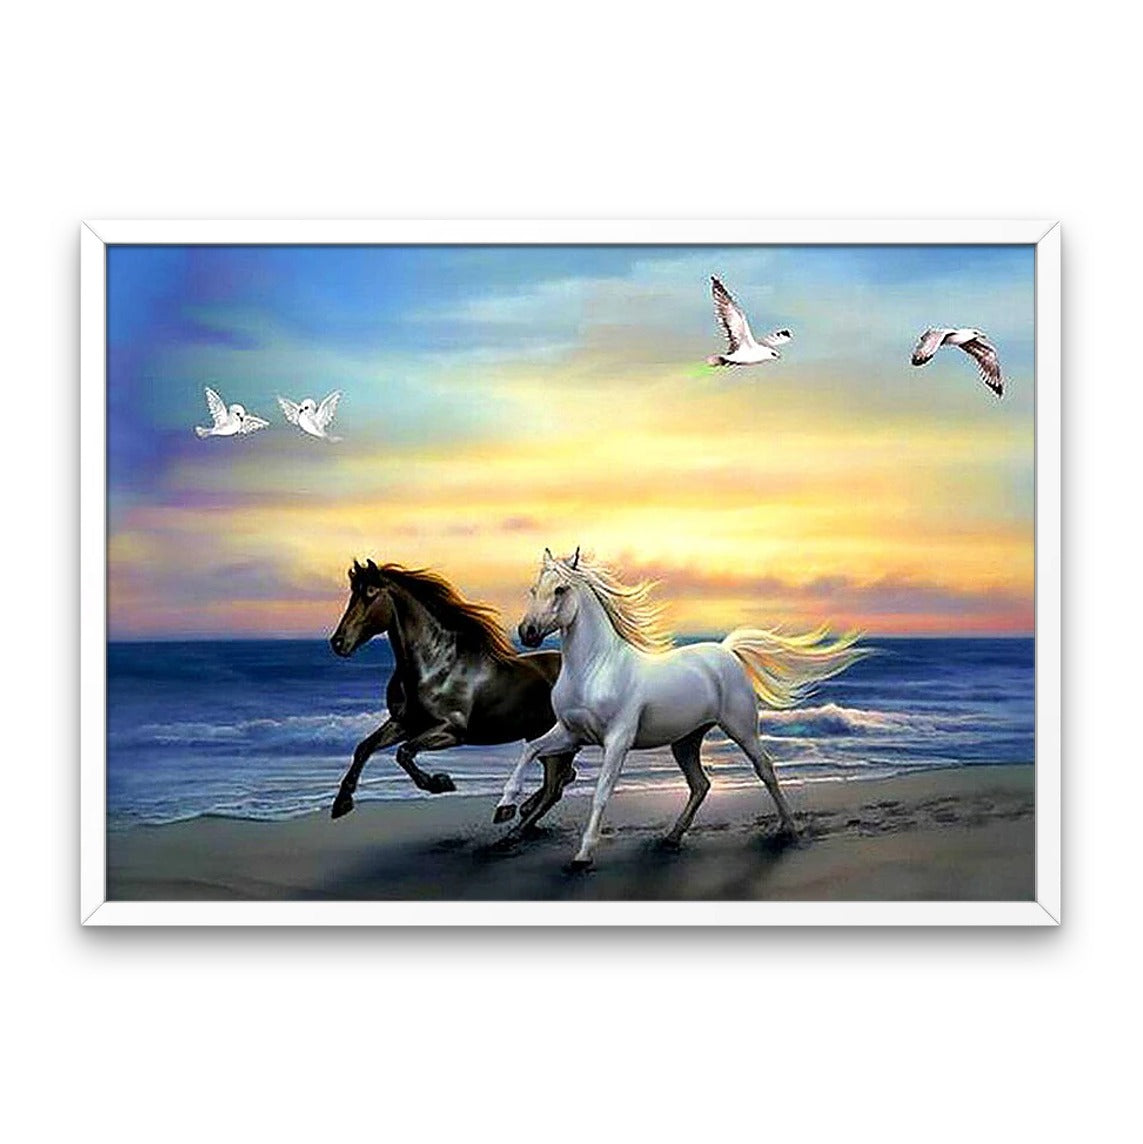 Horses on the Beach - Diamond Painting Kit – Just Paint with Diamonds